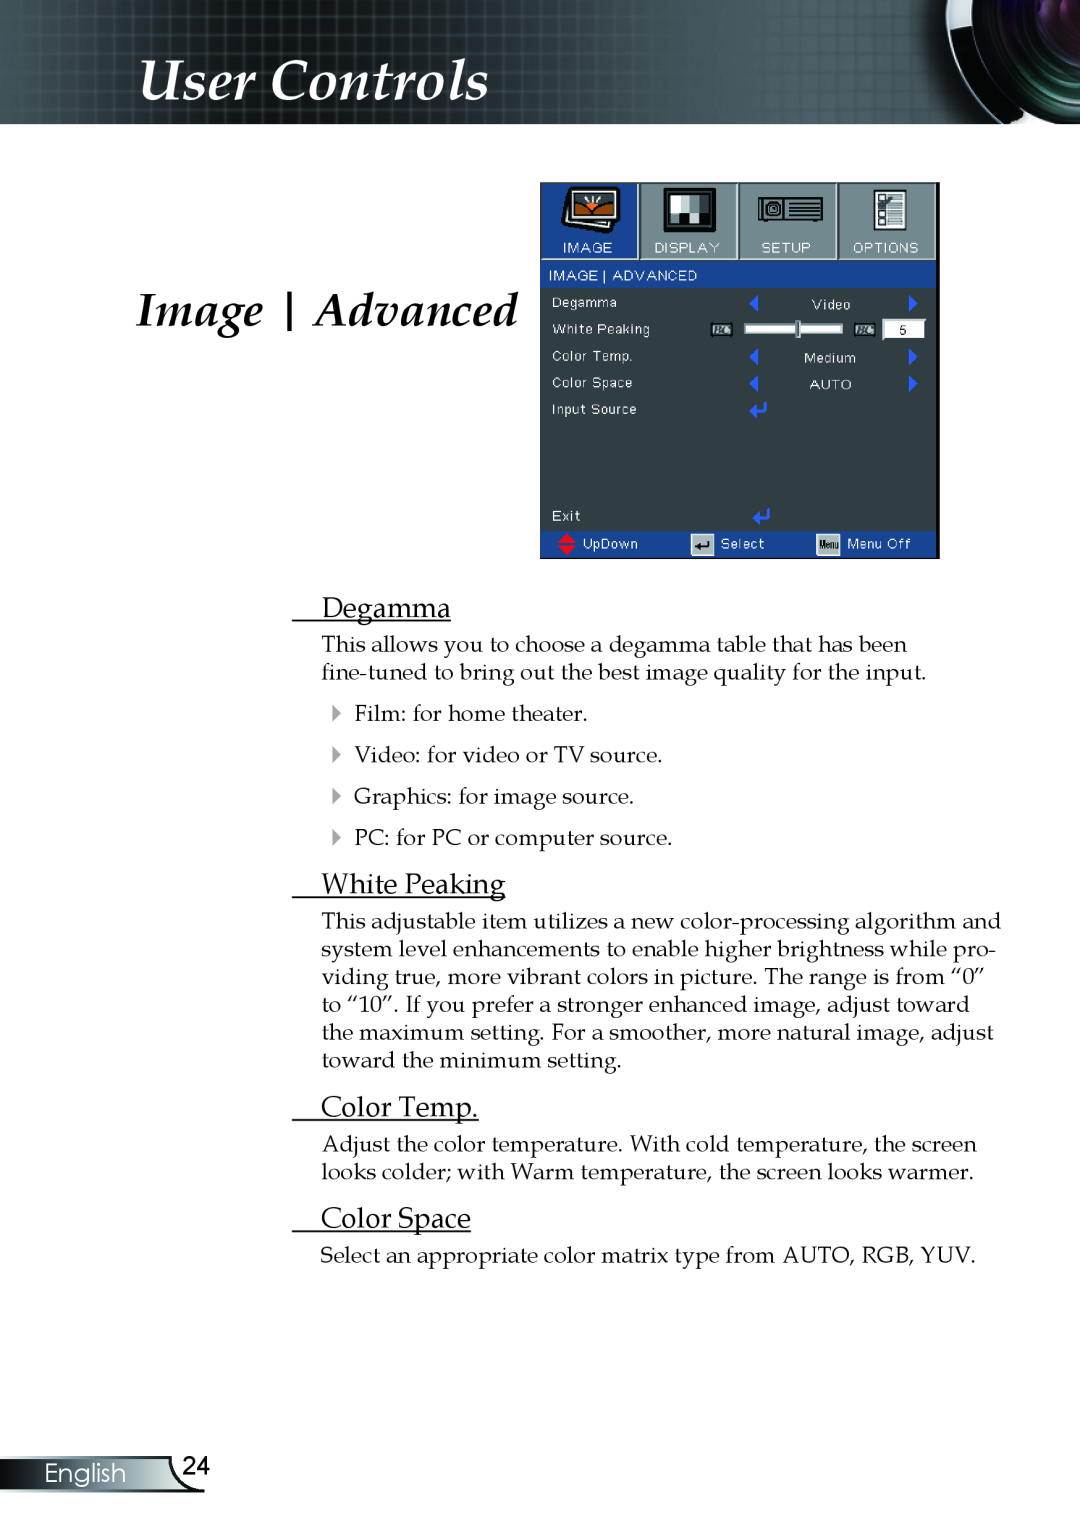 Optoma Technology TX330 manual Image Advanced, Degamma, White Peaking, Color Temp, Color Space, User Controls, English 